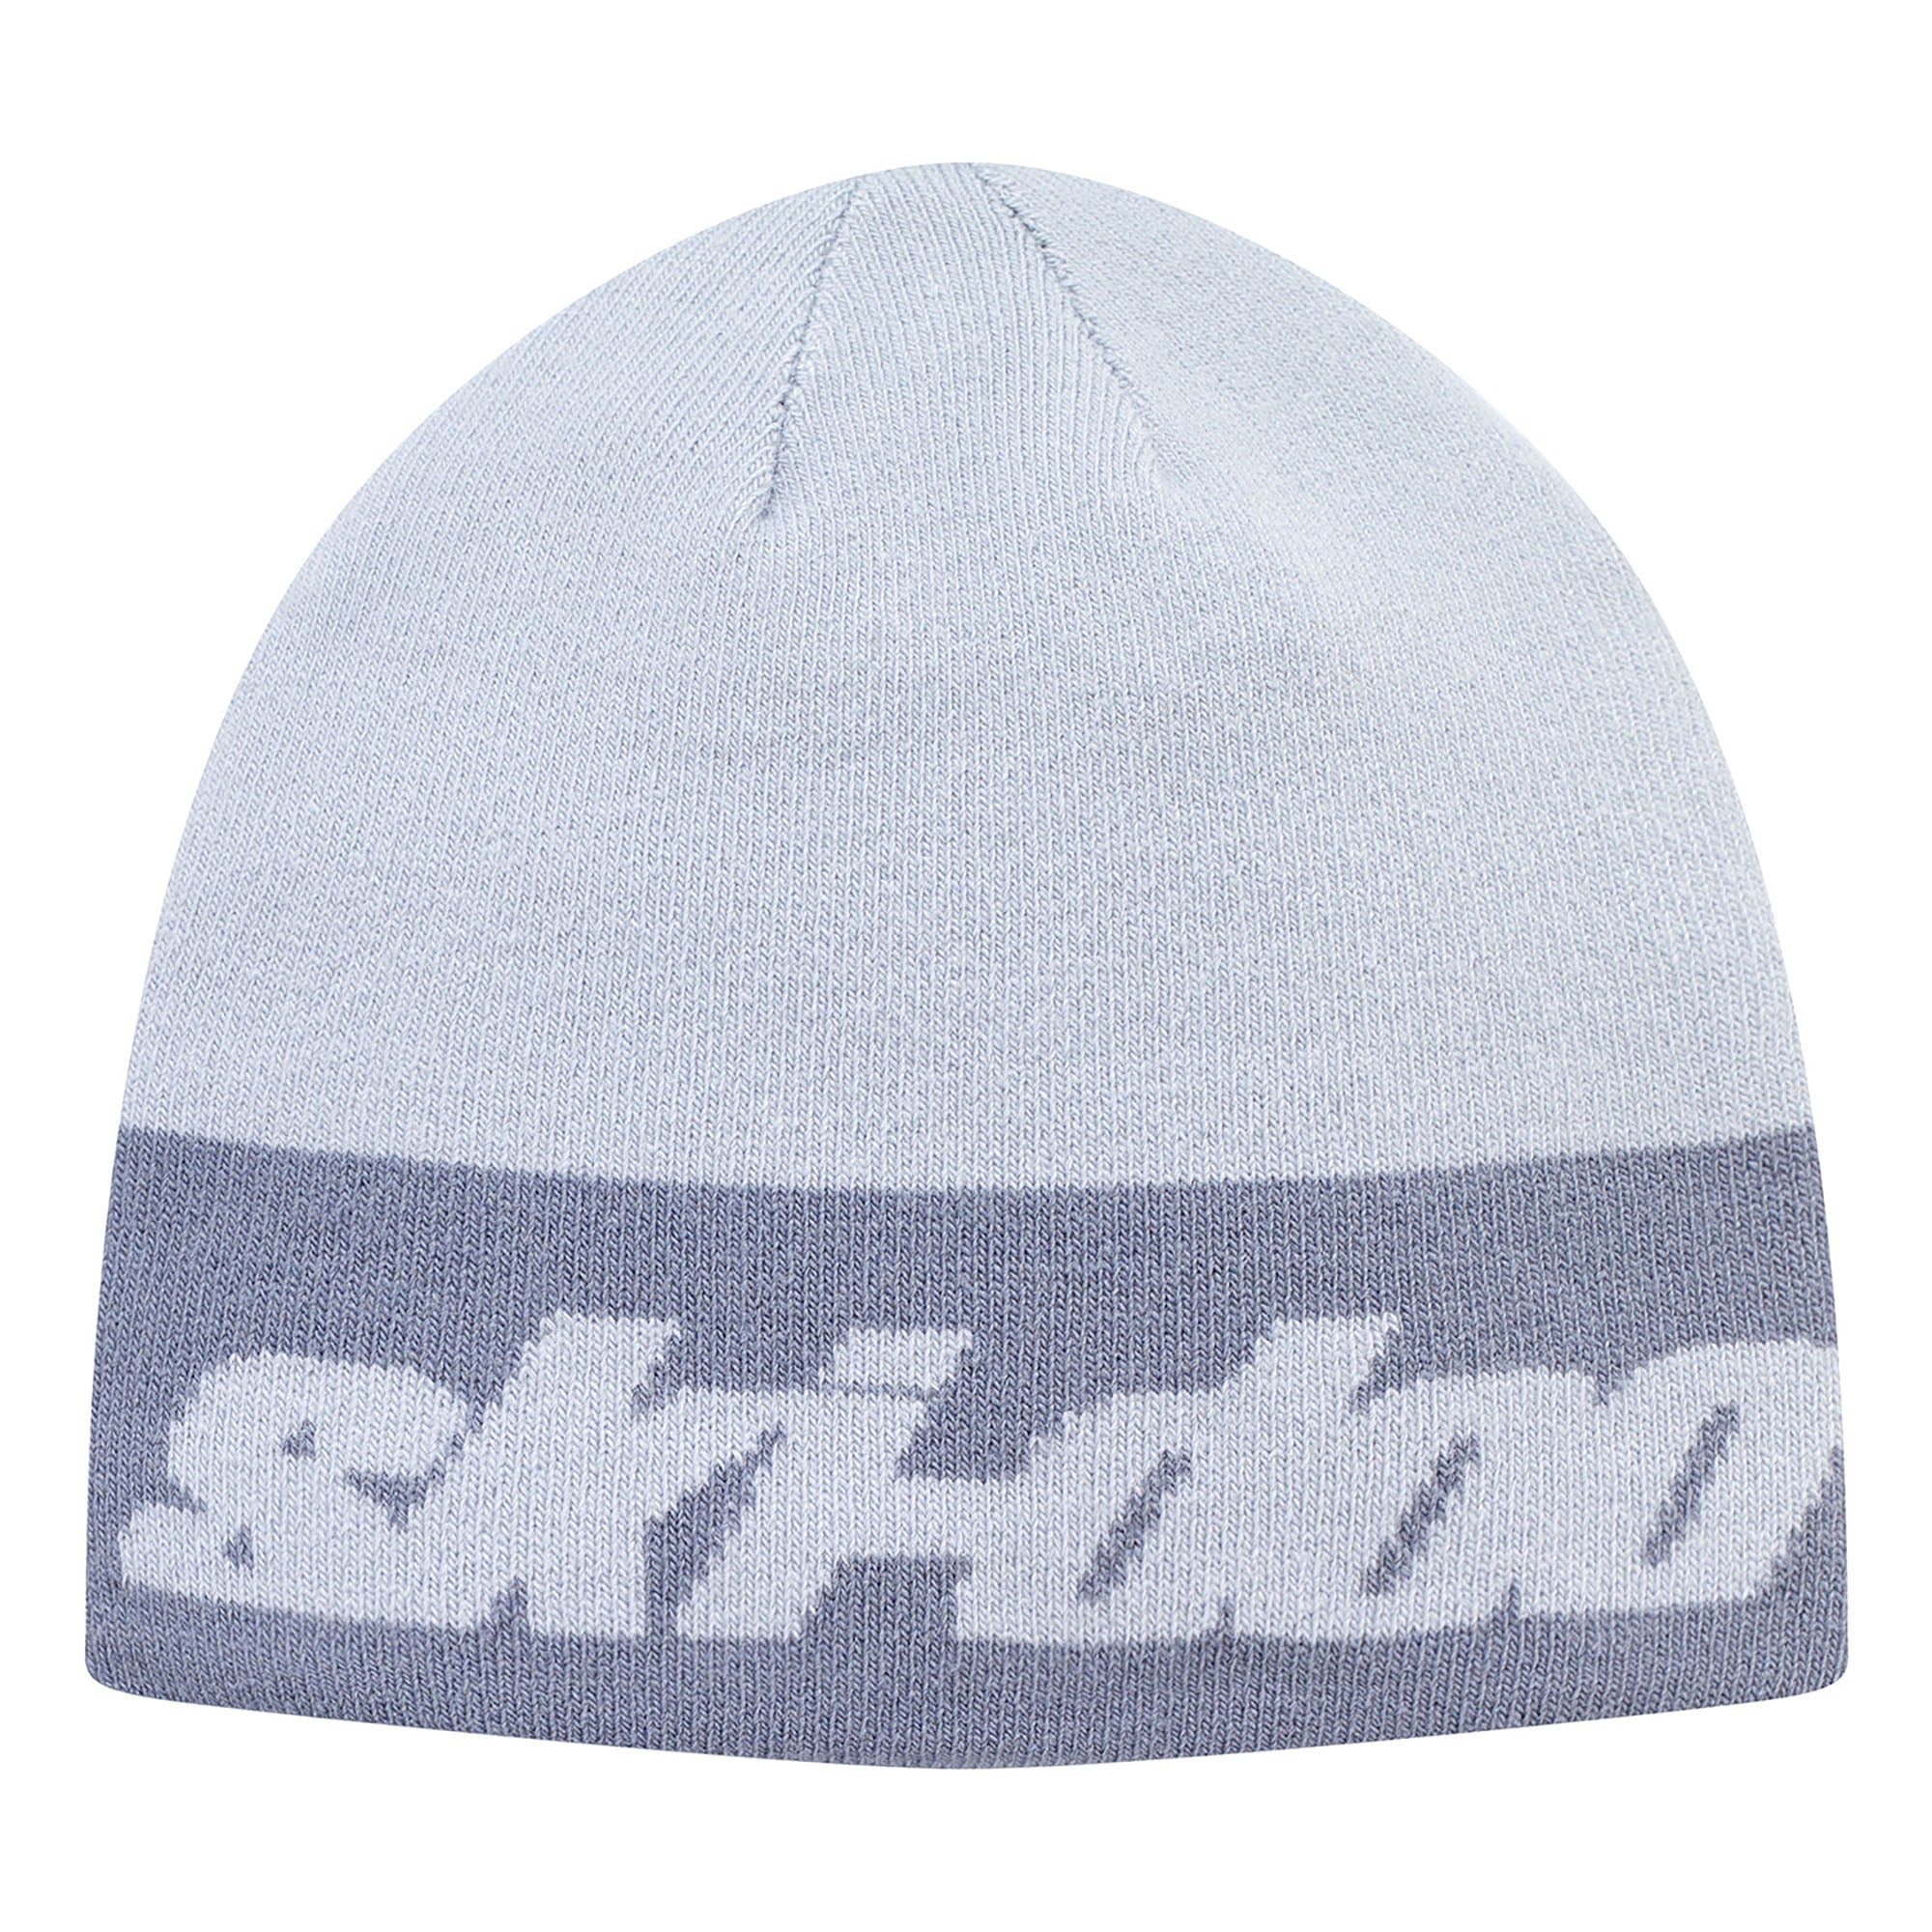 Ski-Doo  Reversible Beanie Skull Cap Hat 2 in 1 Acrylic Knit Logos Warm Winter